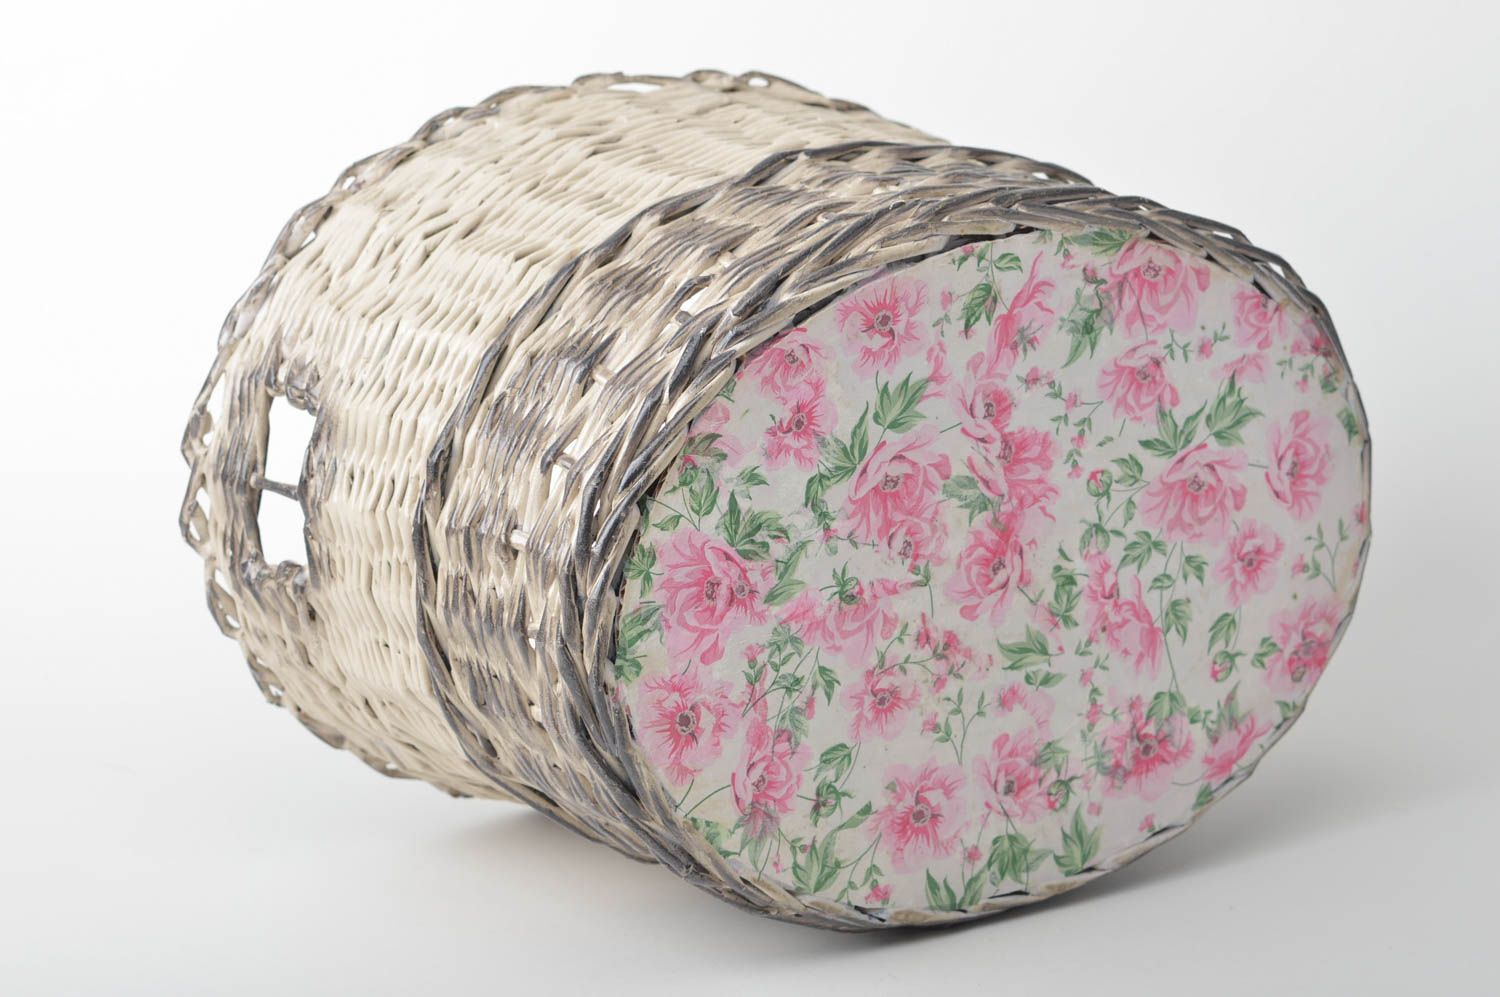 Decoupage ideas handmade woven basket stylish interior decor present basket photo 4